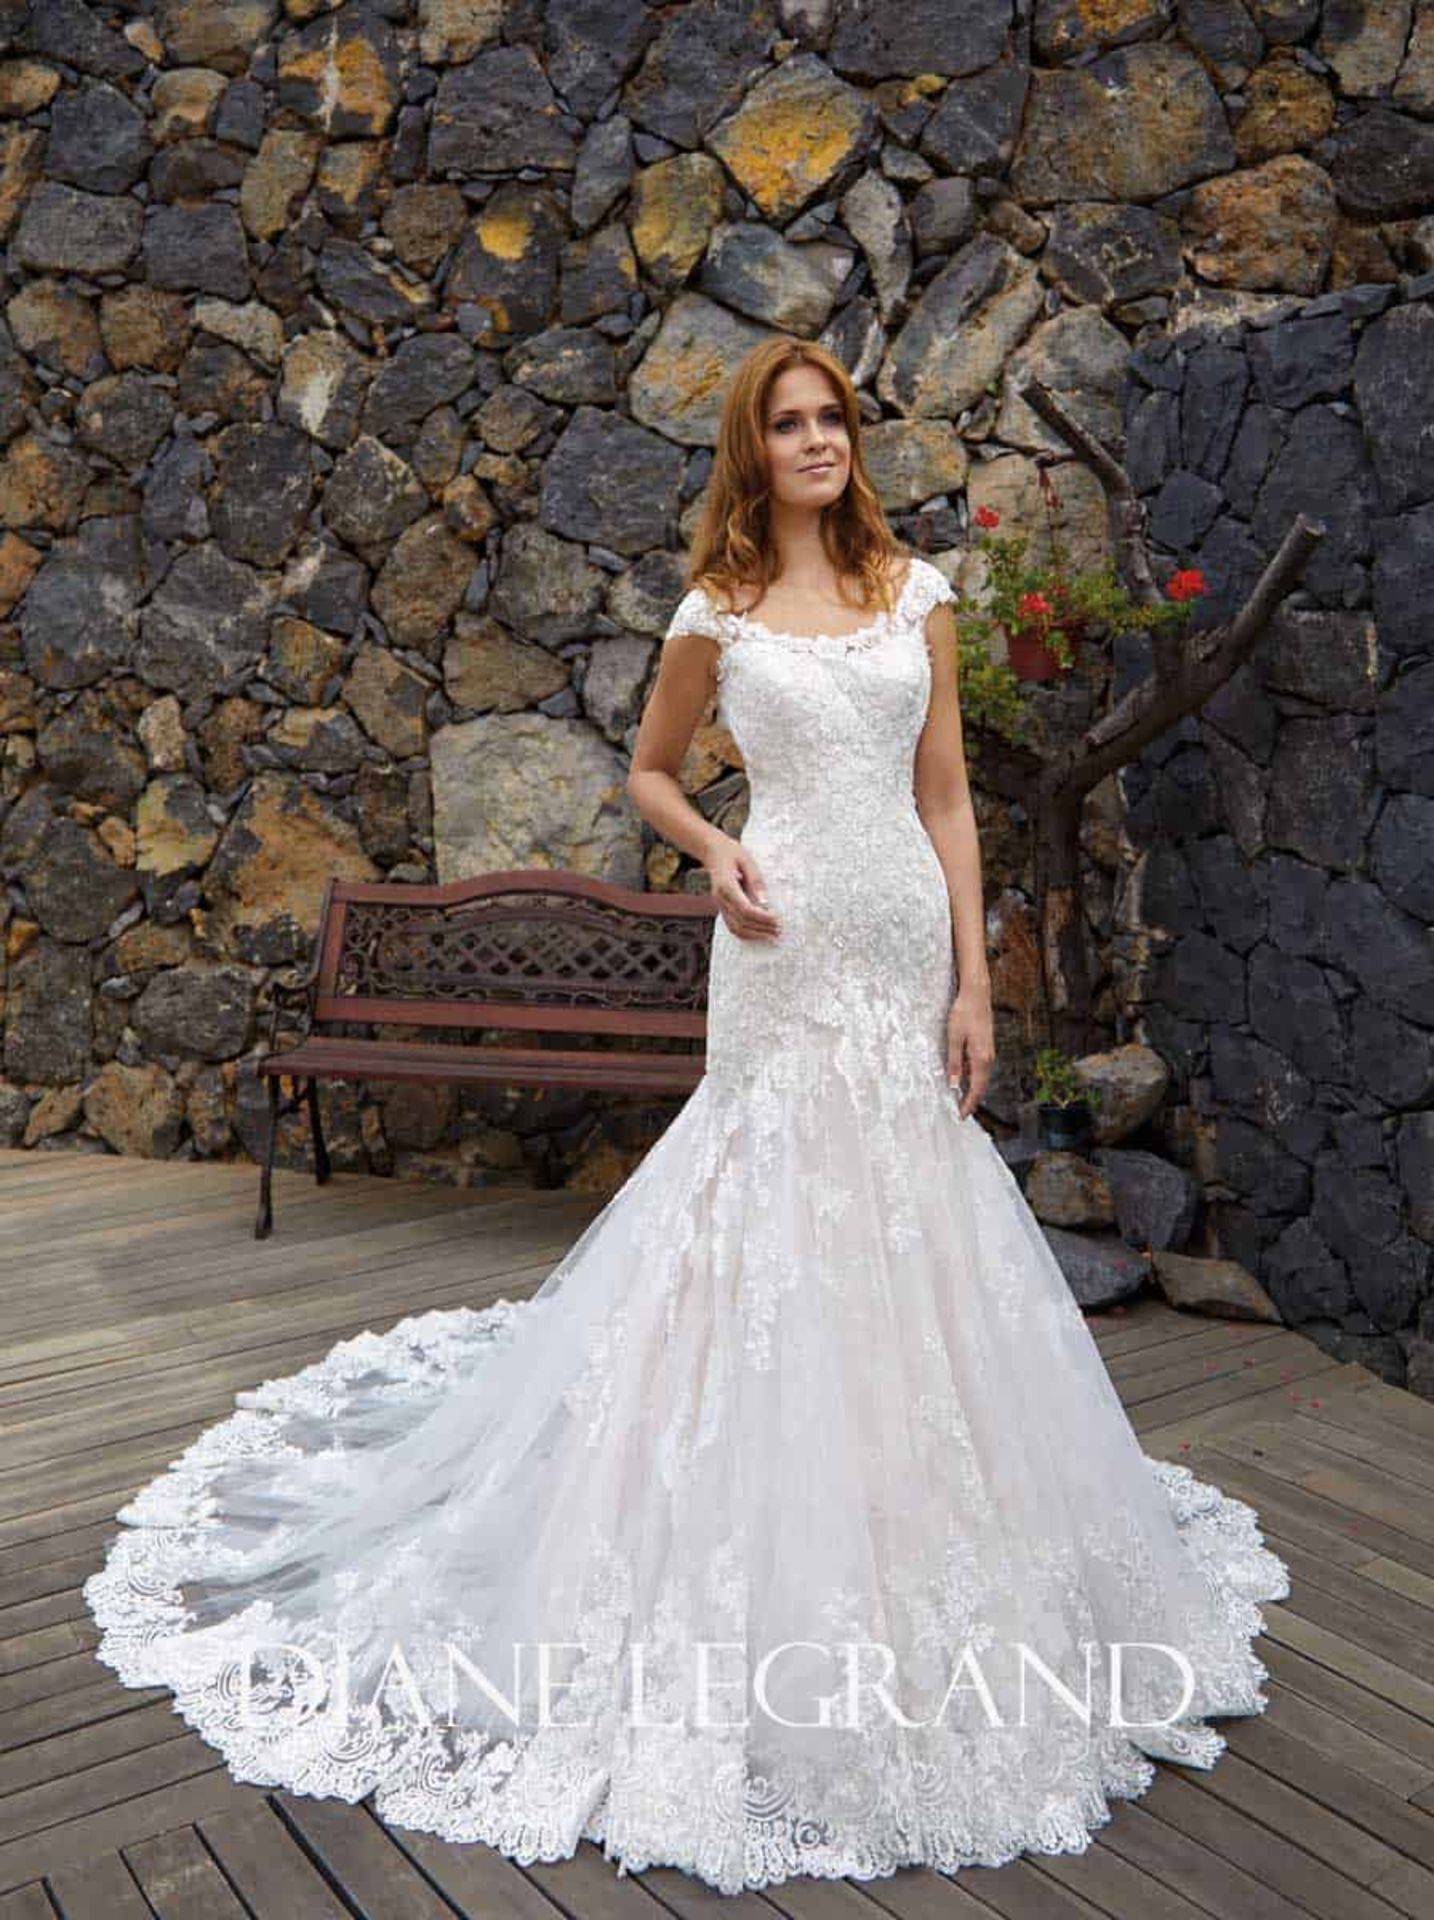 1 x DIANA LEGRANDE '7517' Designer Wedding Dress Bridal Gown - Size: UK 10 - Original RRP £1,800 - Image 2 of 18